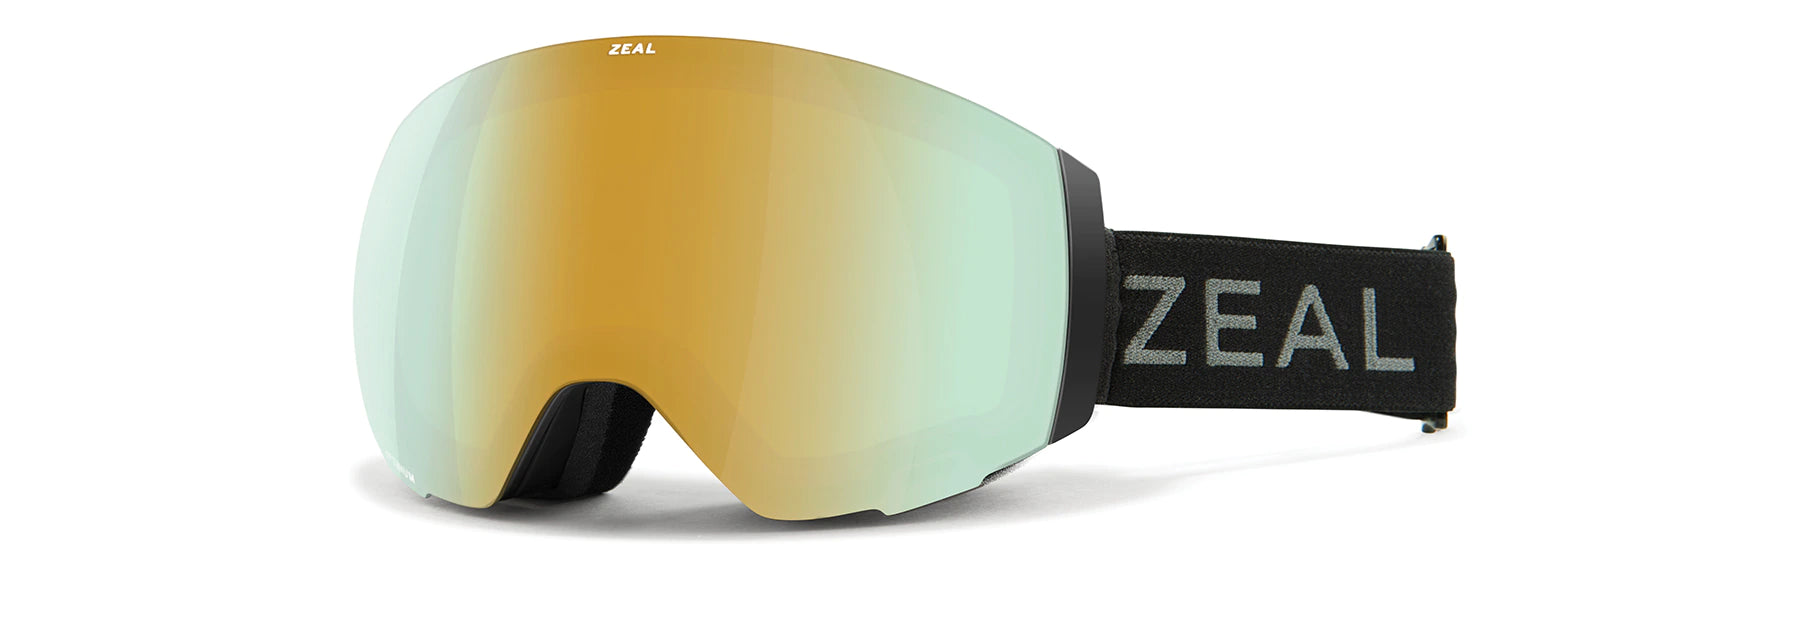 Zeal- Portal Asian Fit RLS Ski & Snowboard Goggles w/ Bonus Lens